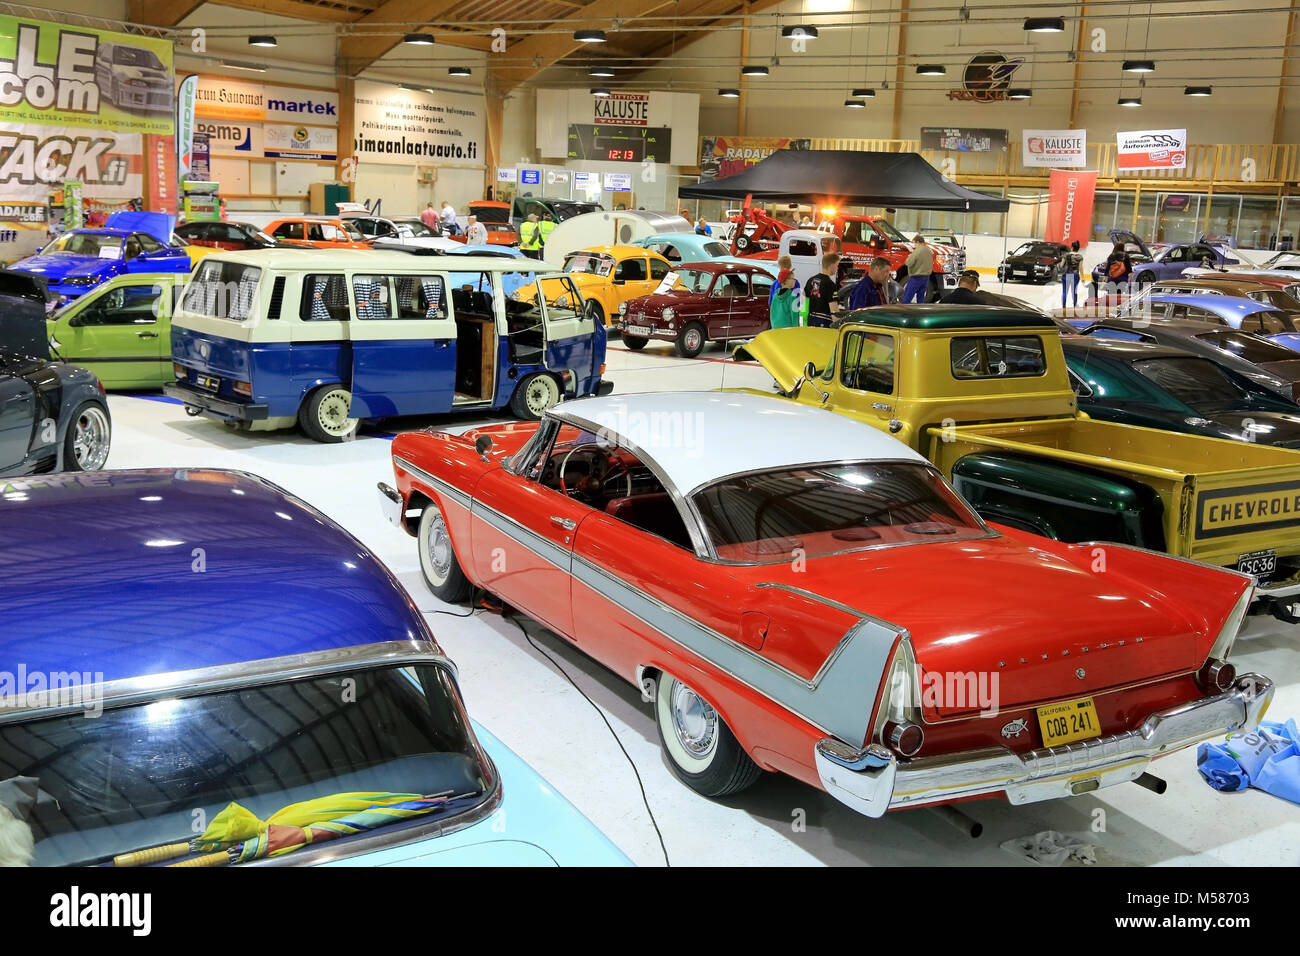 LOIMAA, Finnland - 15. JUNI 2014: Indoor Anzeige der Automobile HeMa Show 2013 in Loimaa, Finnland. Stockfoto